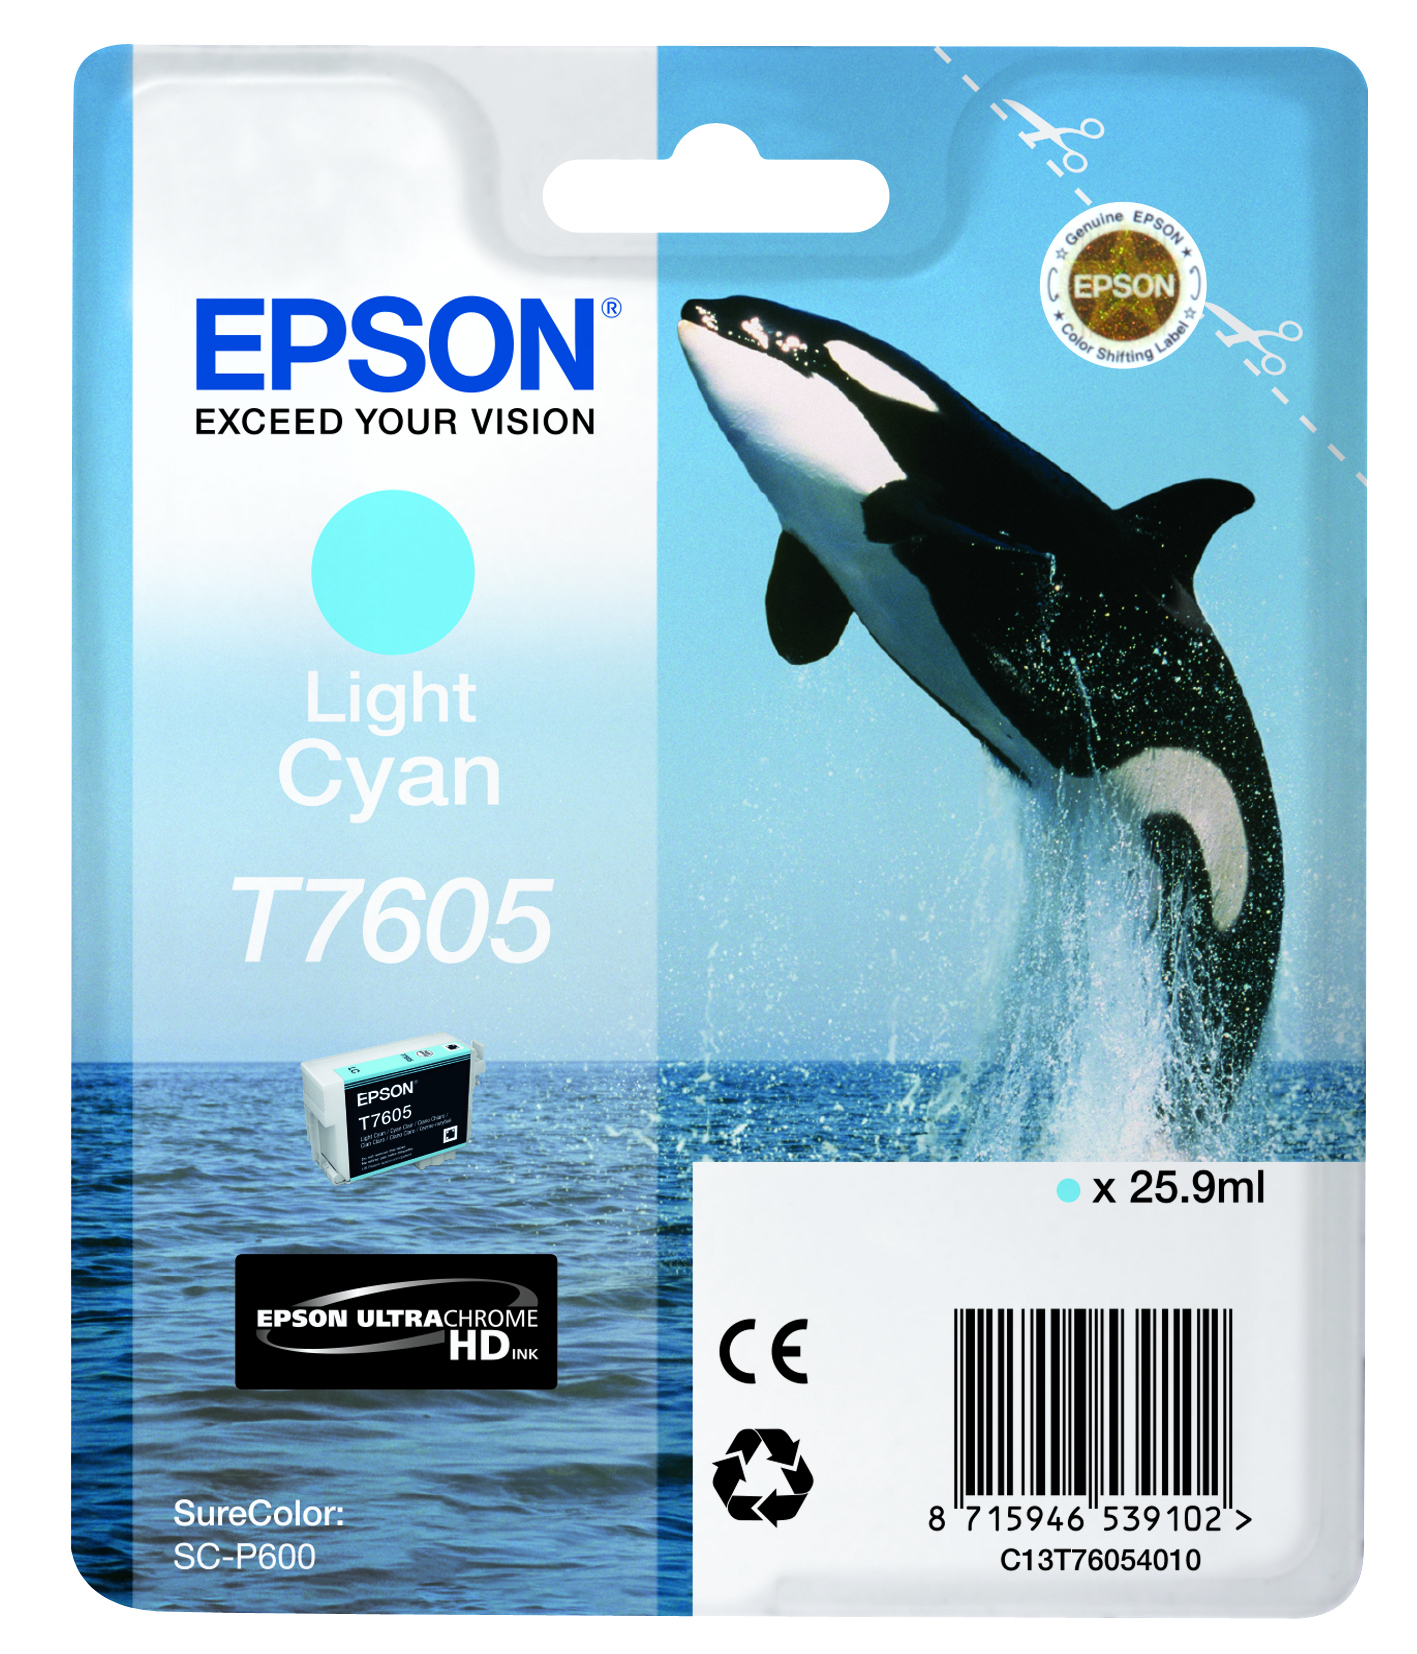 Epson T7605 lichtcyaan single pack / Lichtyaan